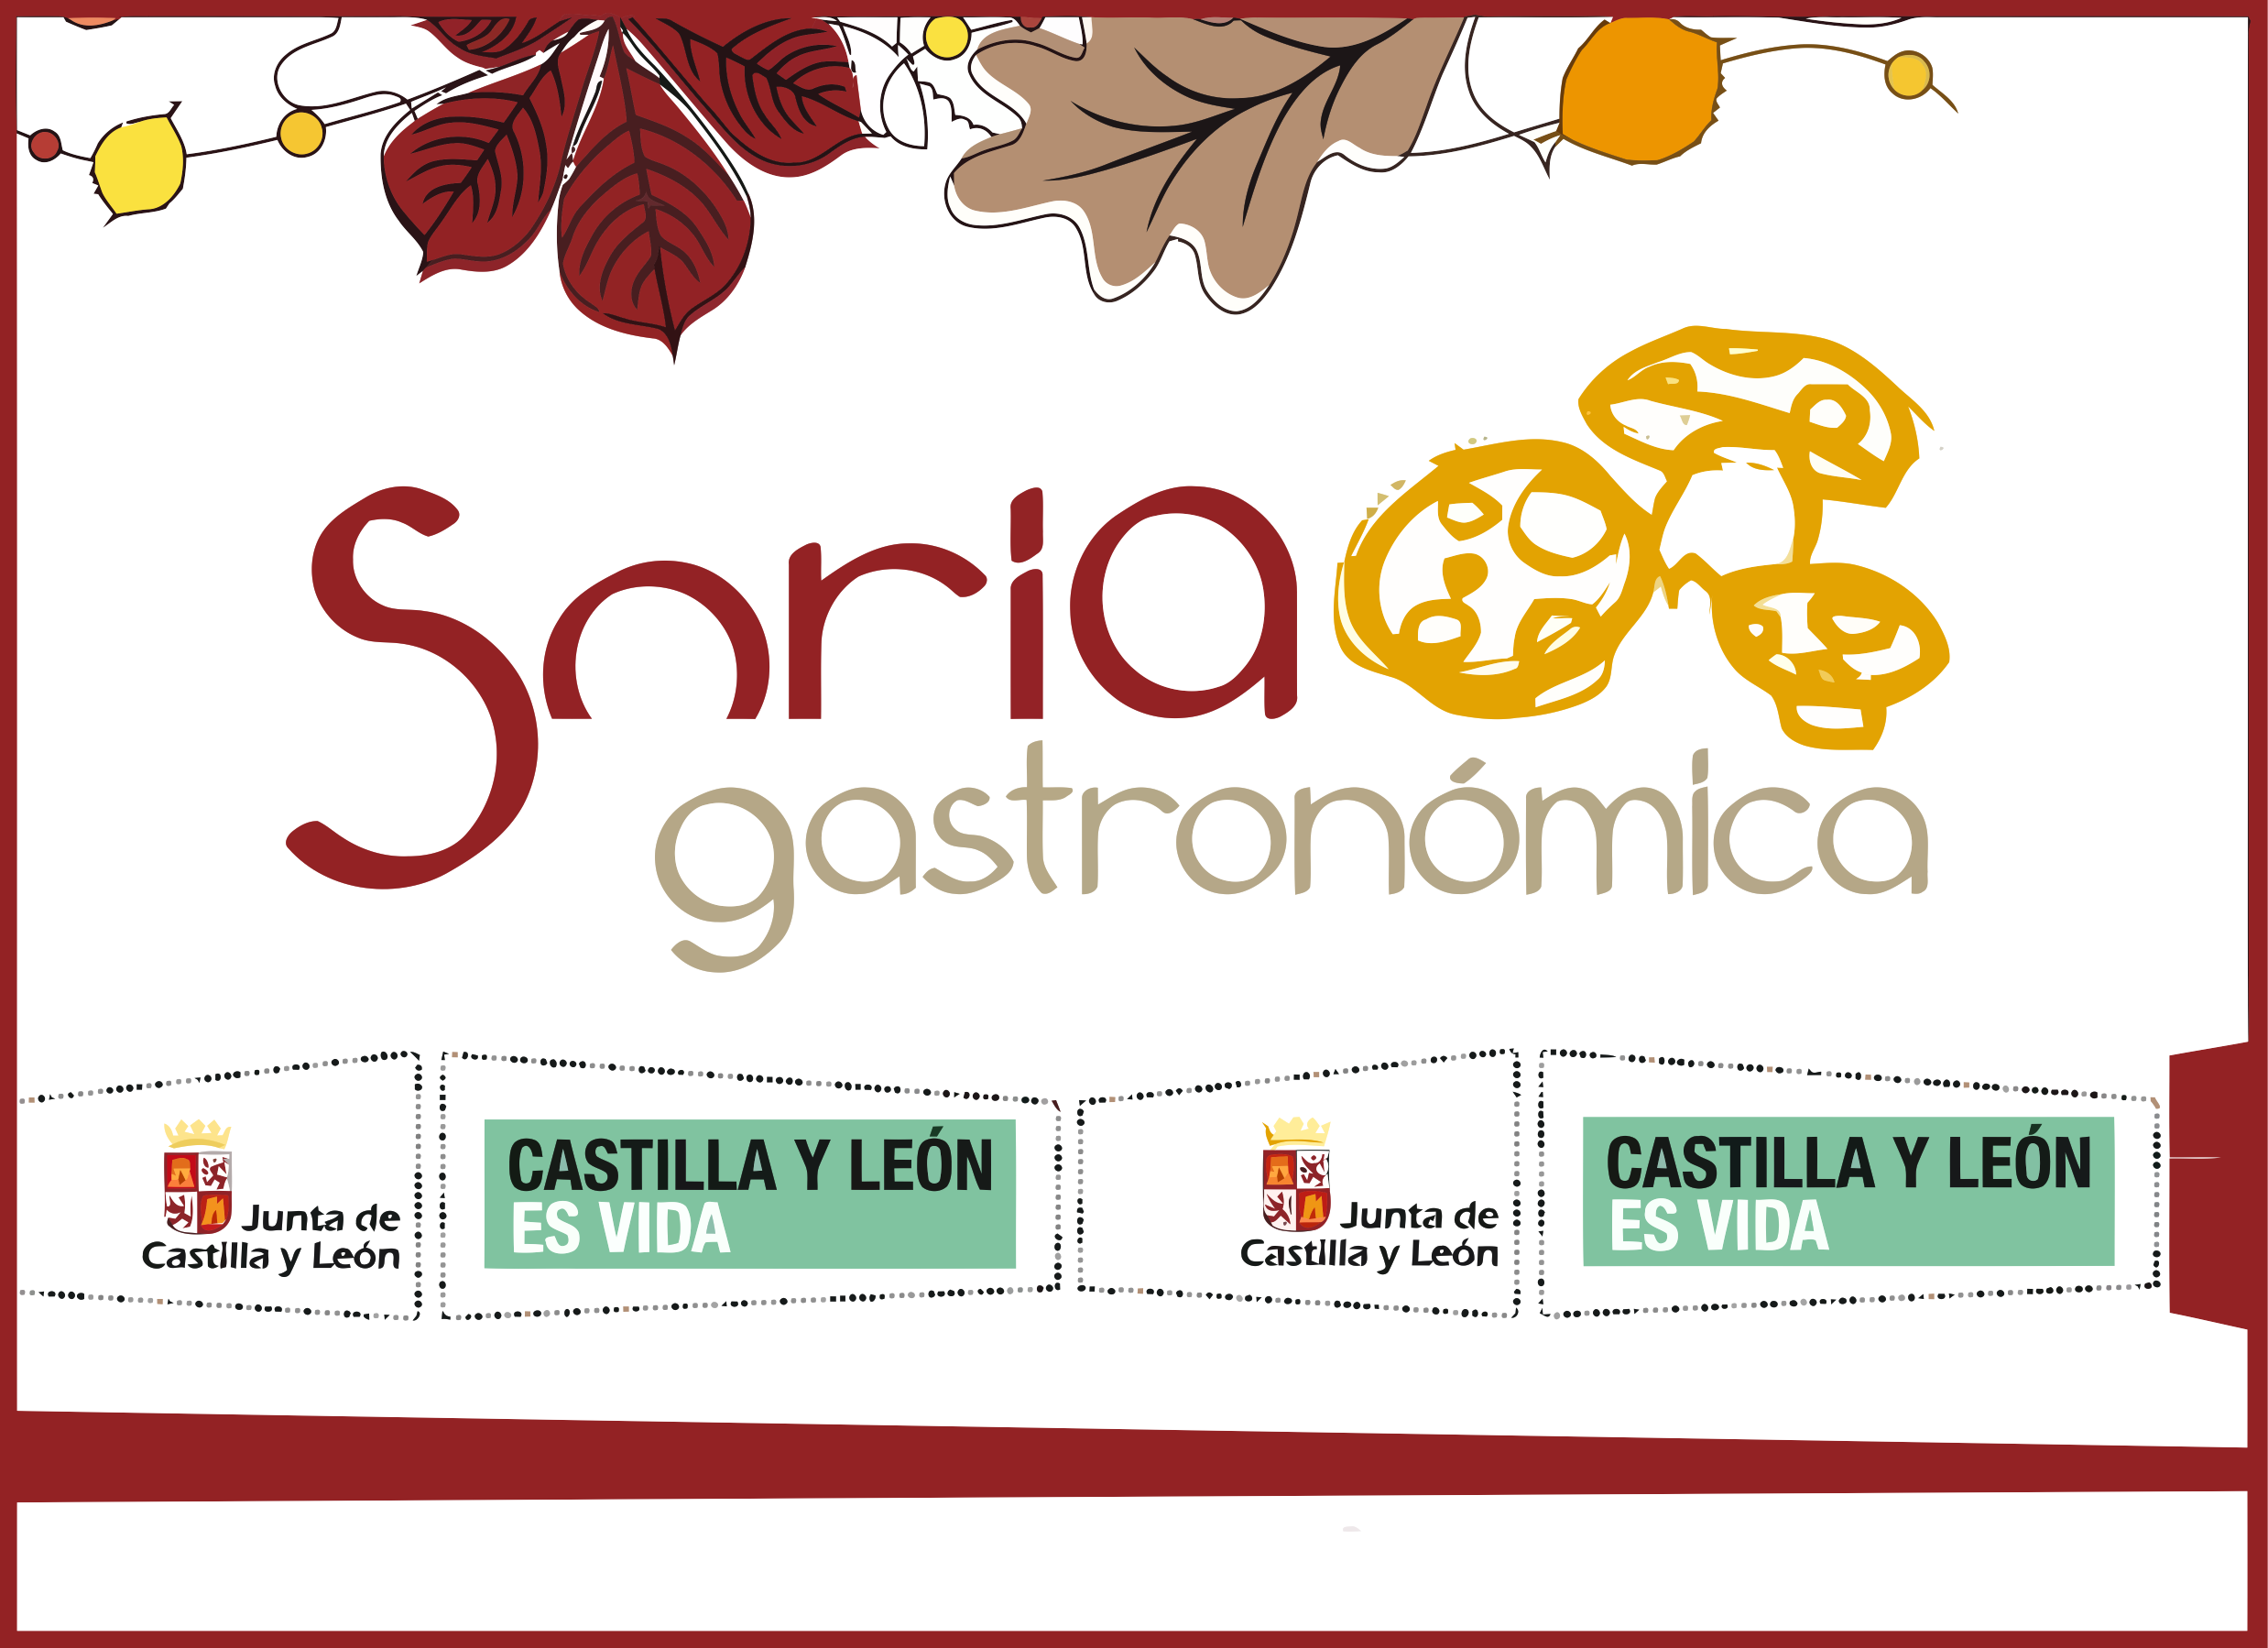 Soria Gastronómica 2012